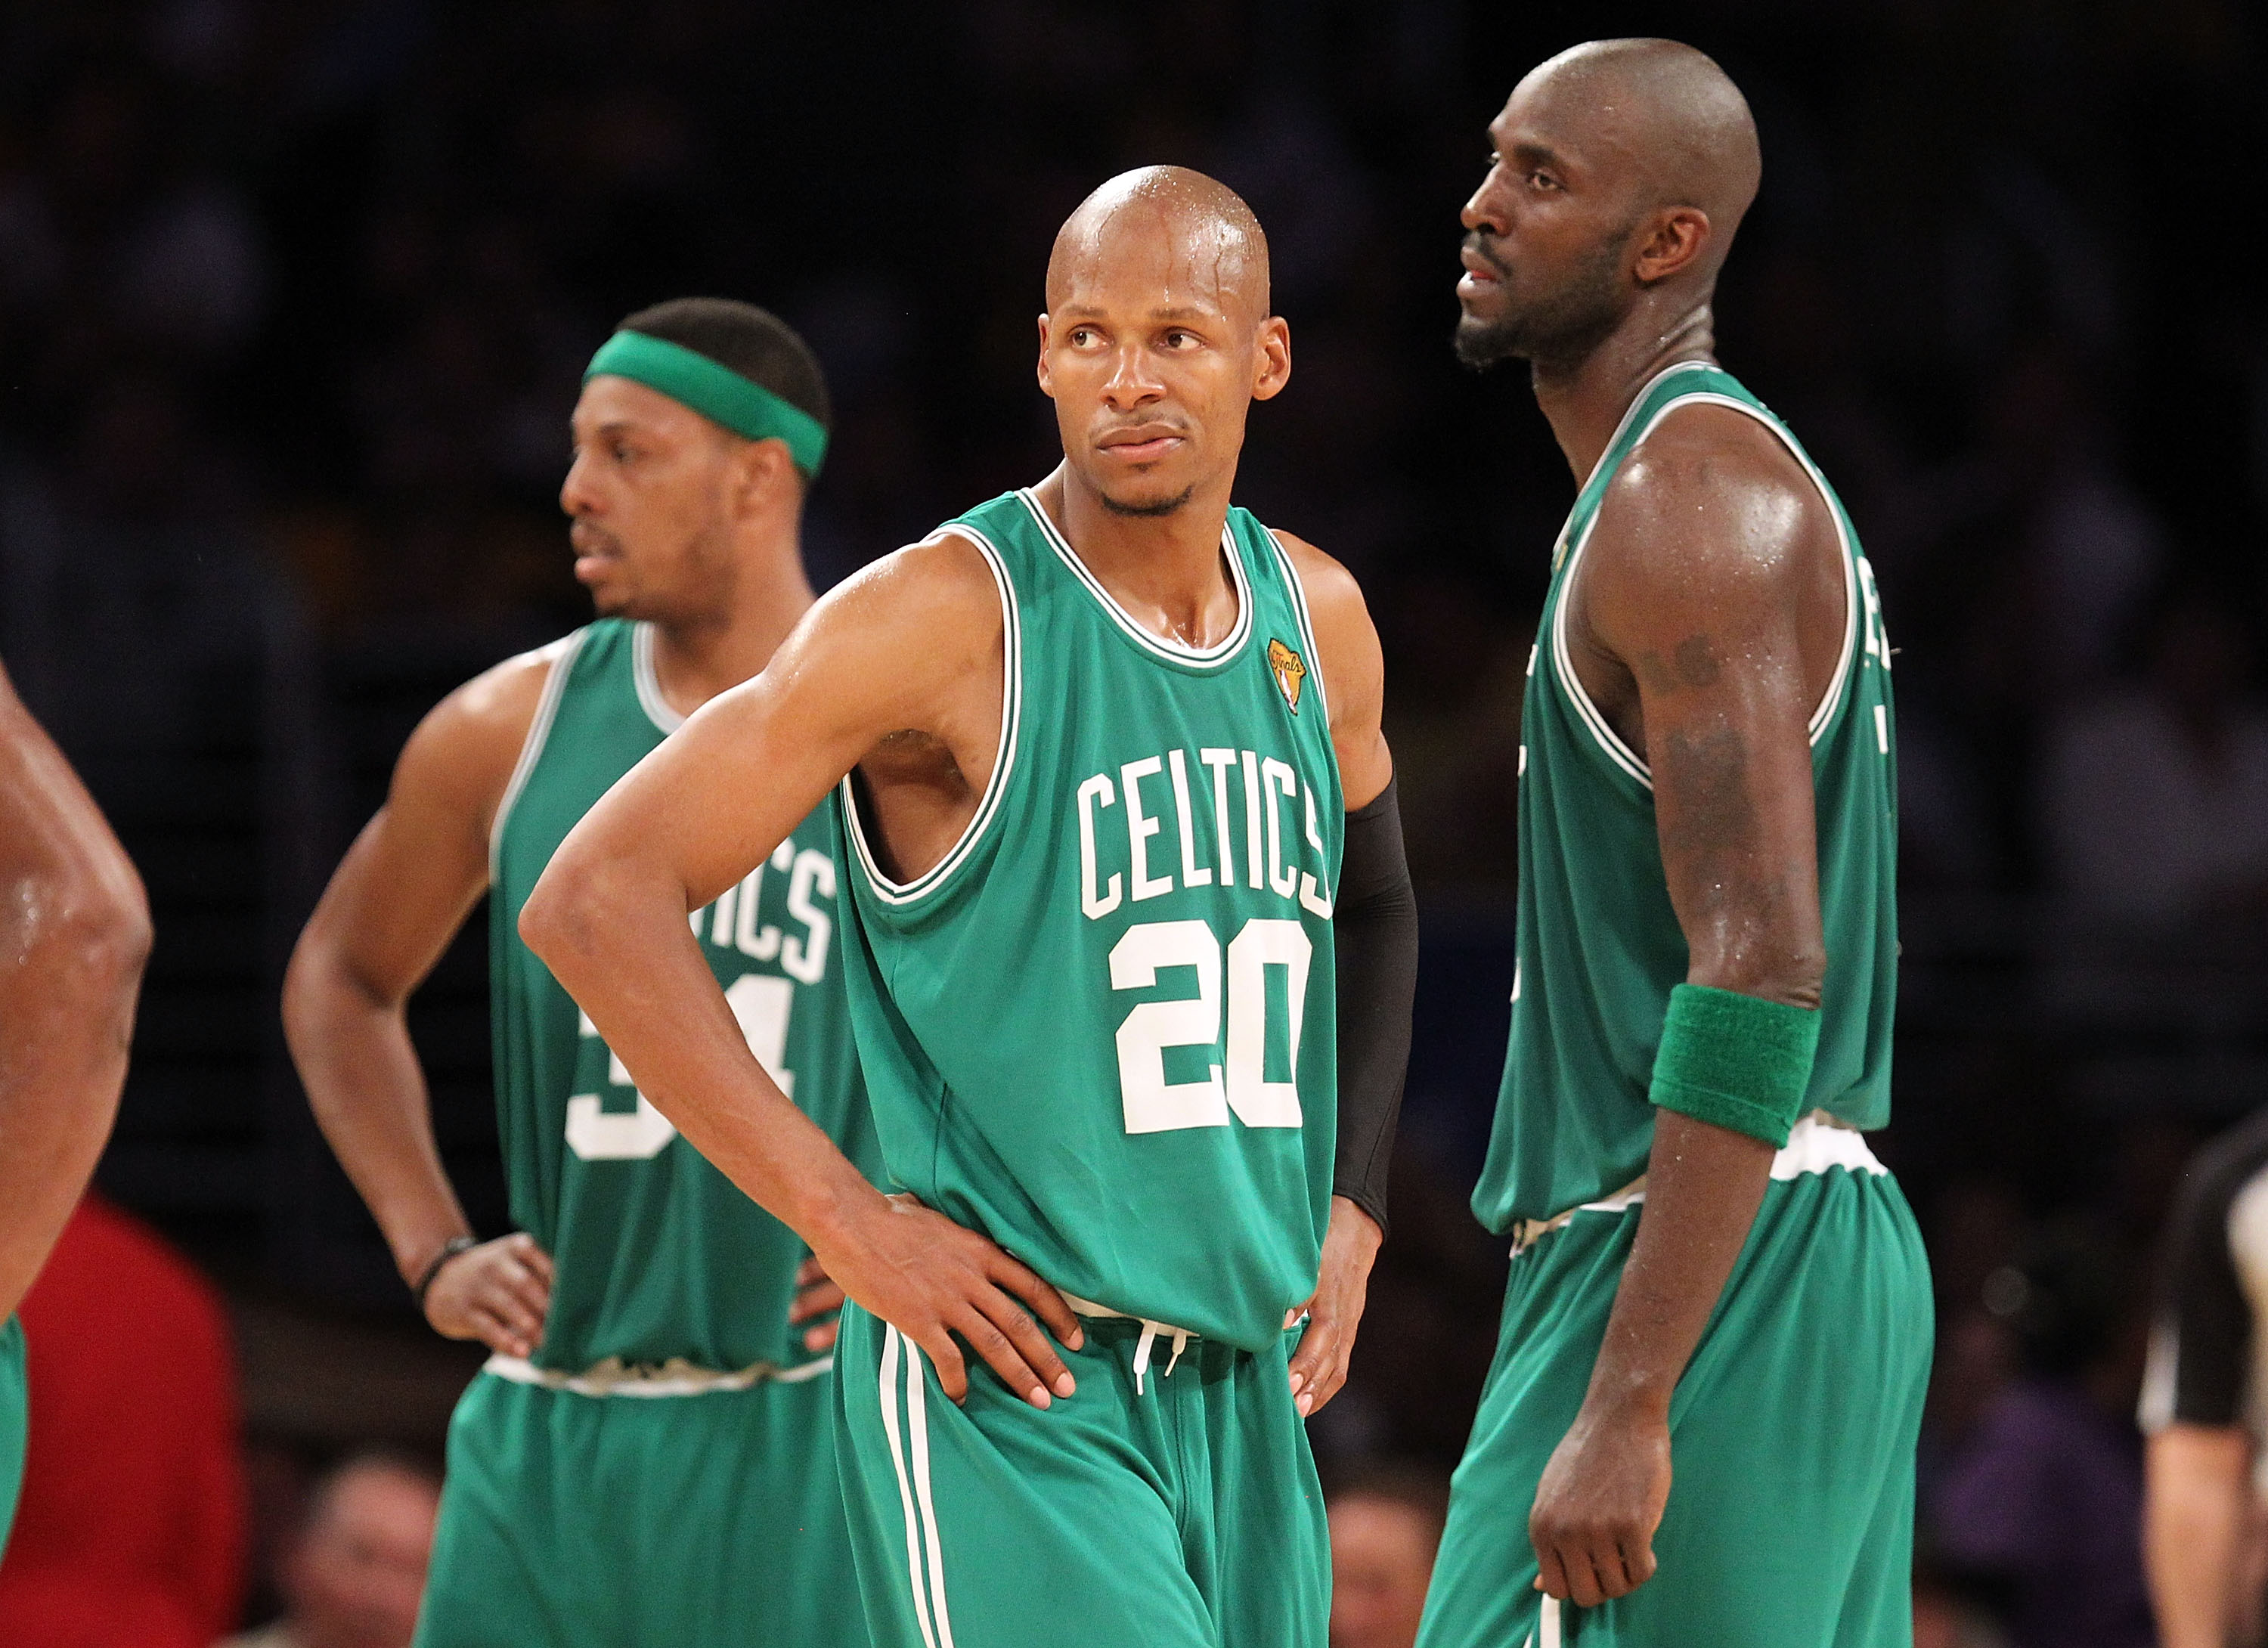 Where do Paul Pierce & Kevin Garnett rank on the list of all-time Celtics?